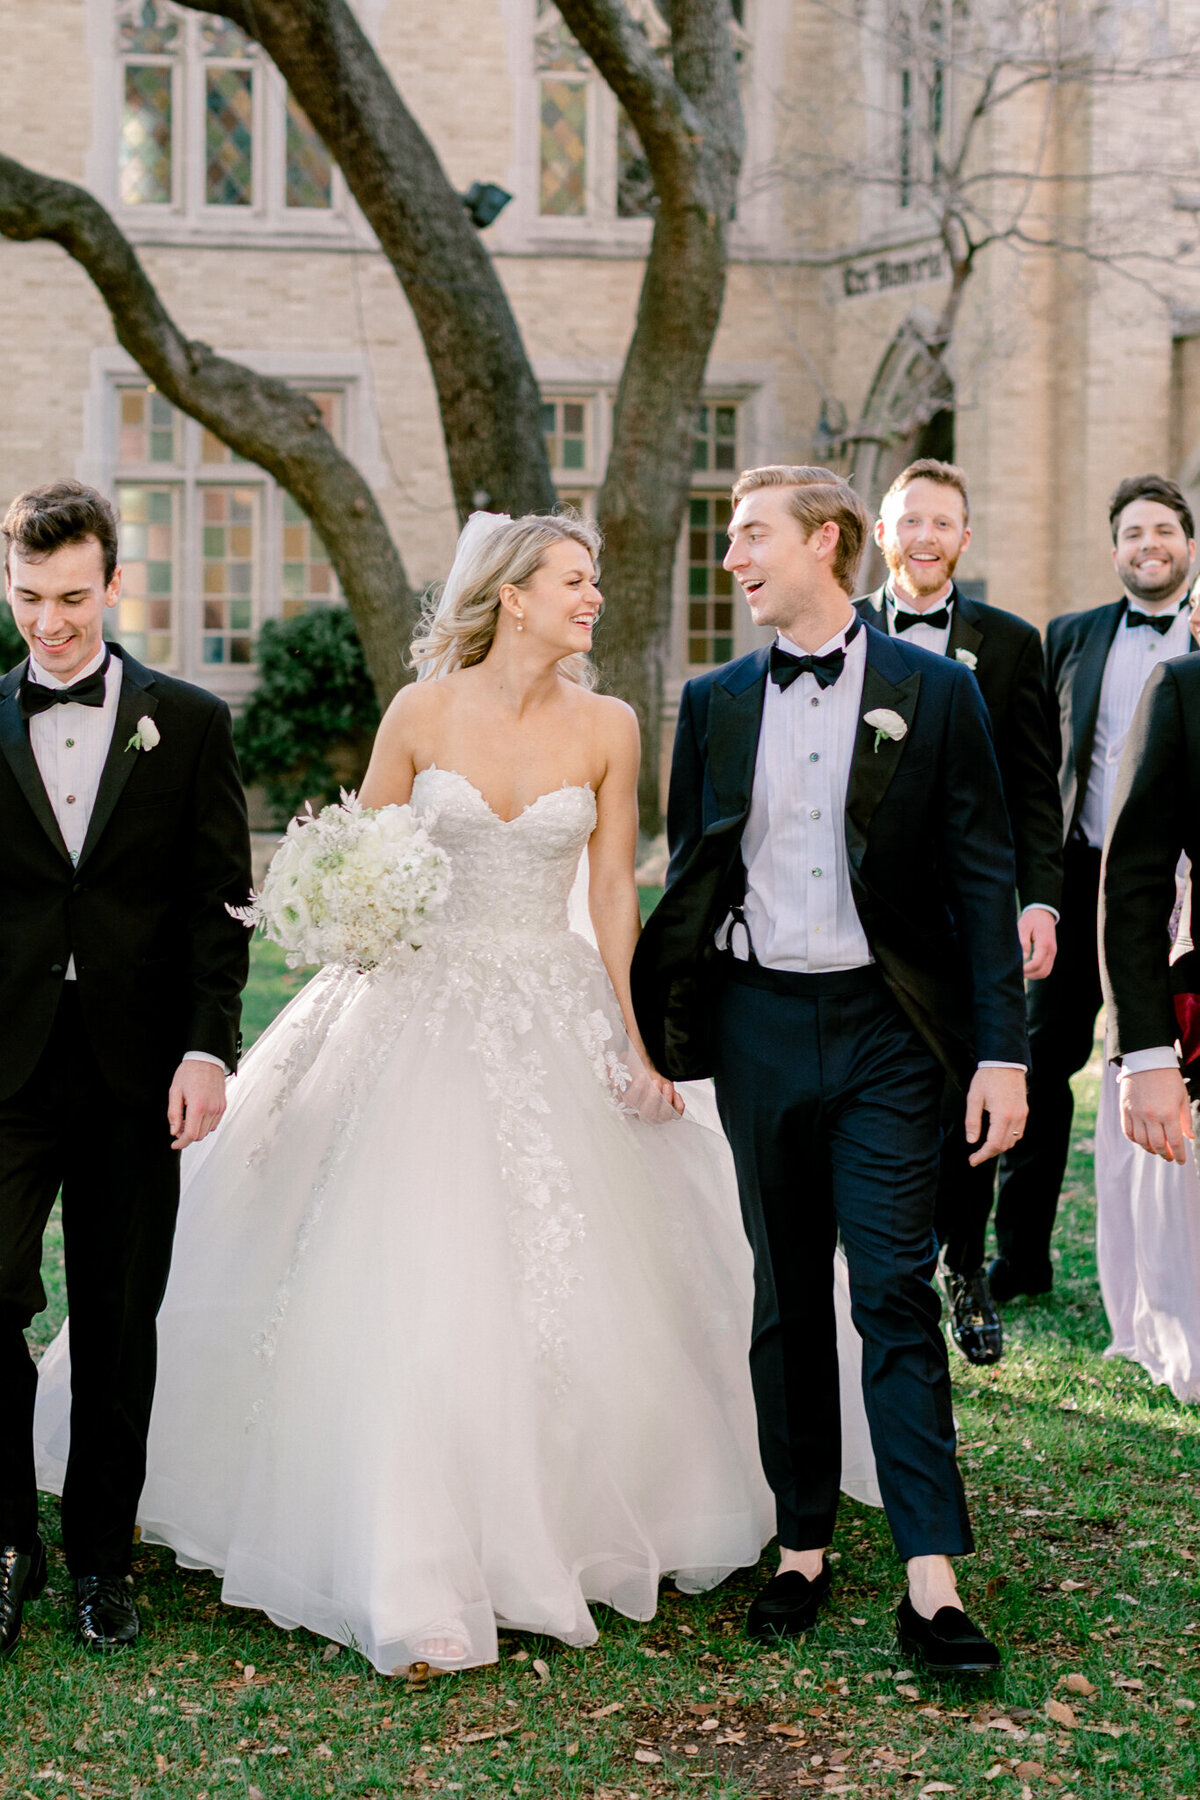 Shelby & Thomas's Wedding at HPUMC The Room on Main | Dallas Wedding Photographer | Sami Kathryn Photography-146